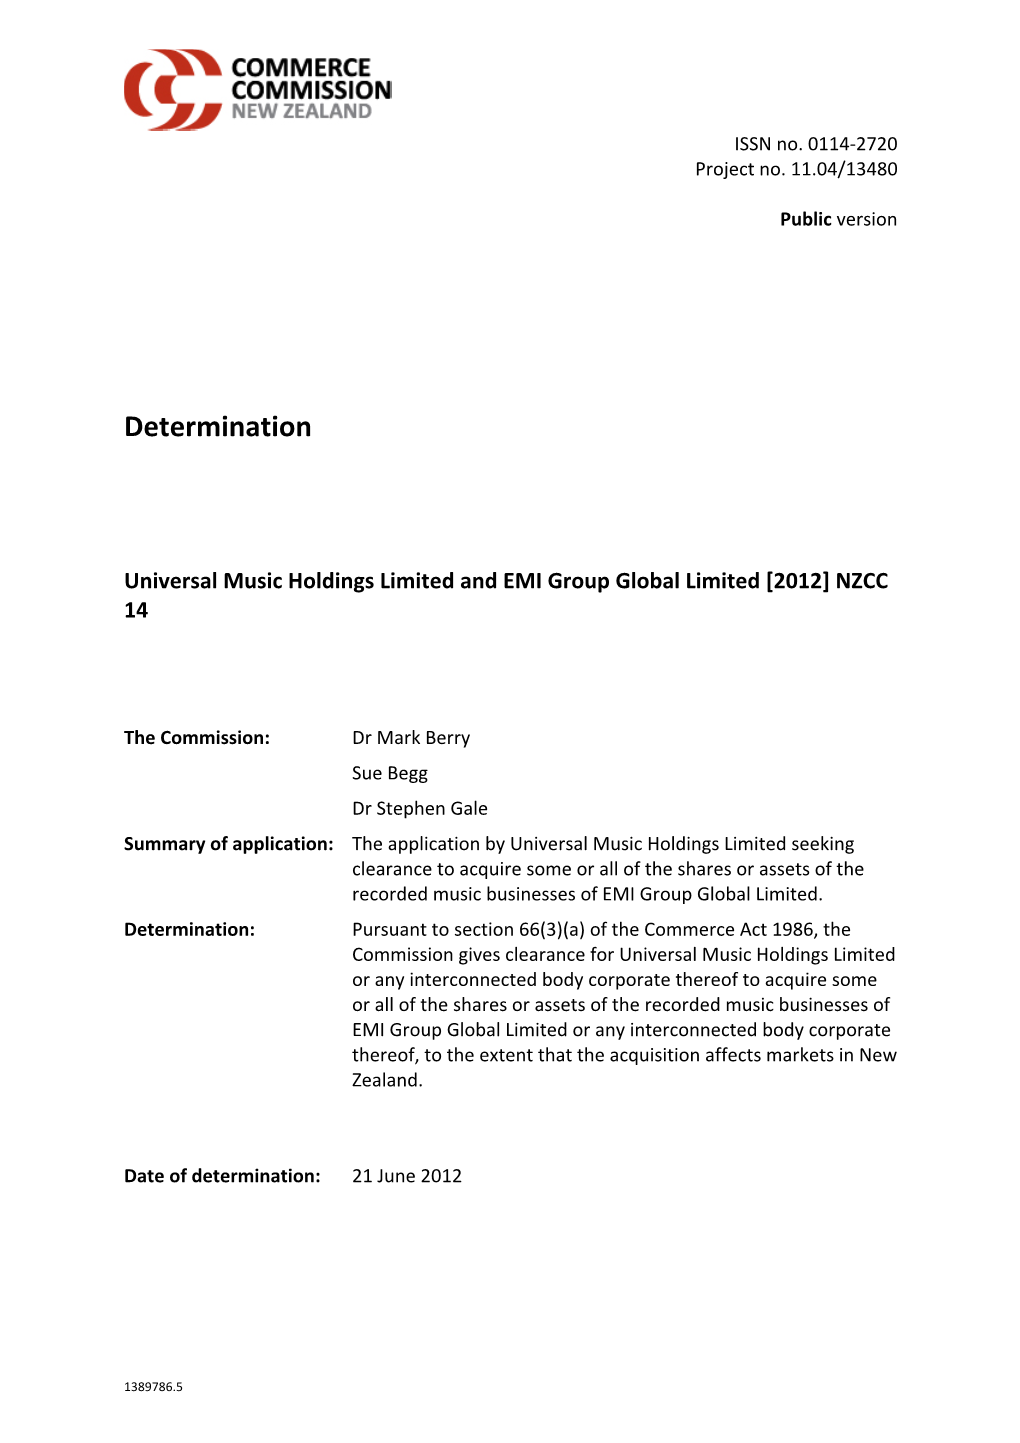 NZCC 14 Universal Holdings and EMI Global